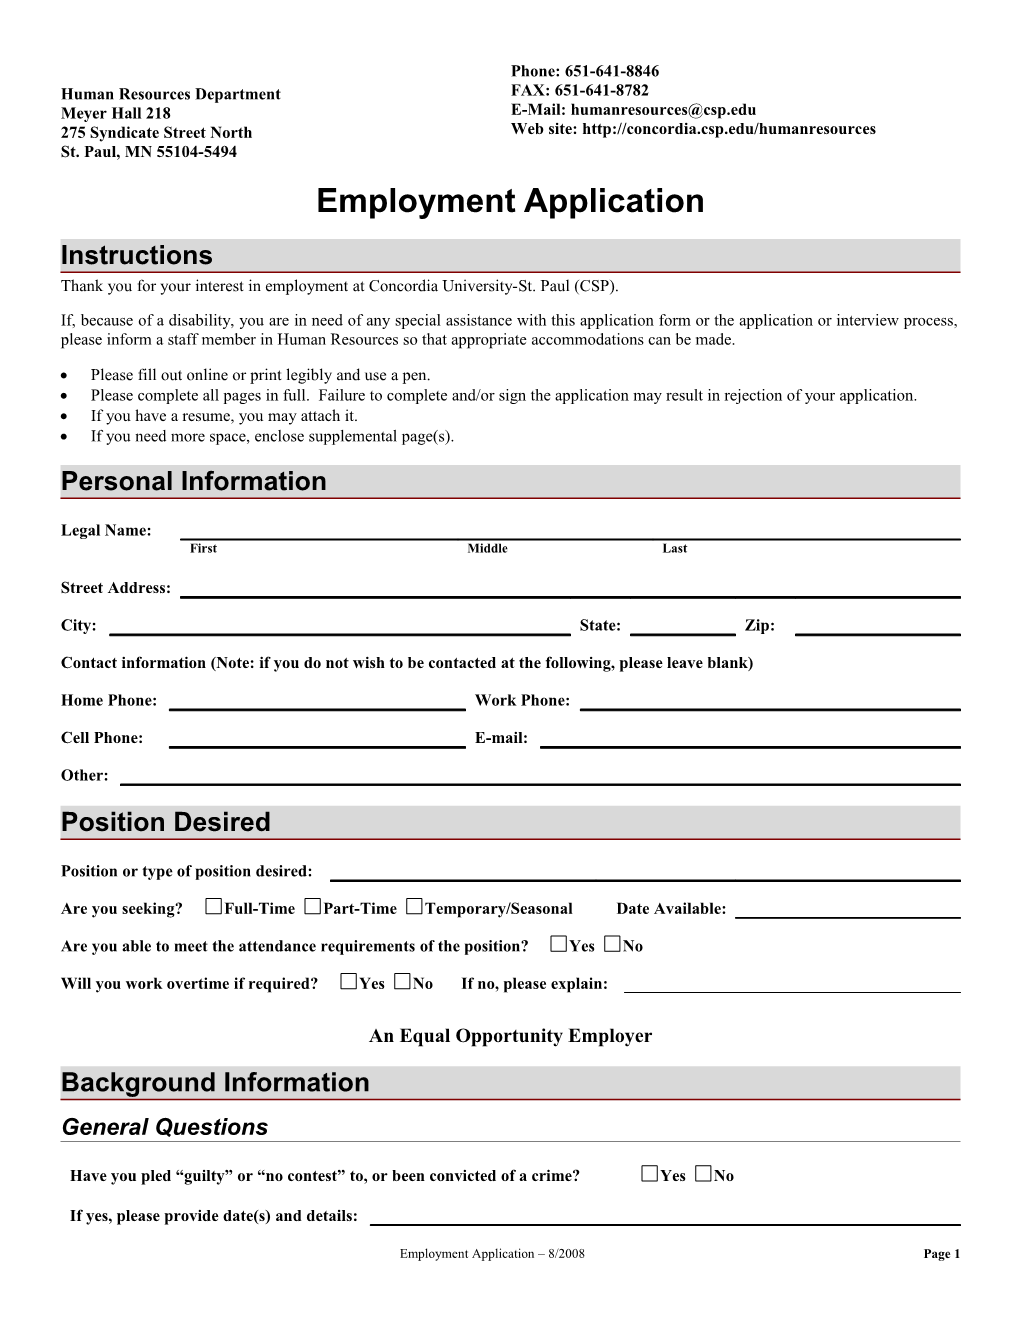 CSP Staff Employment Application